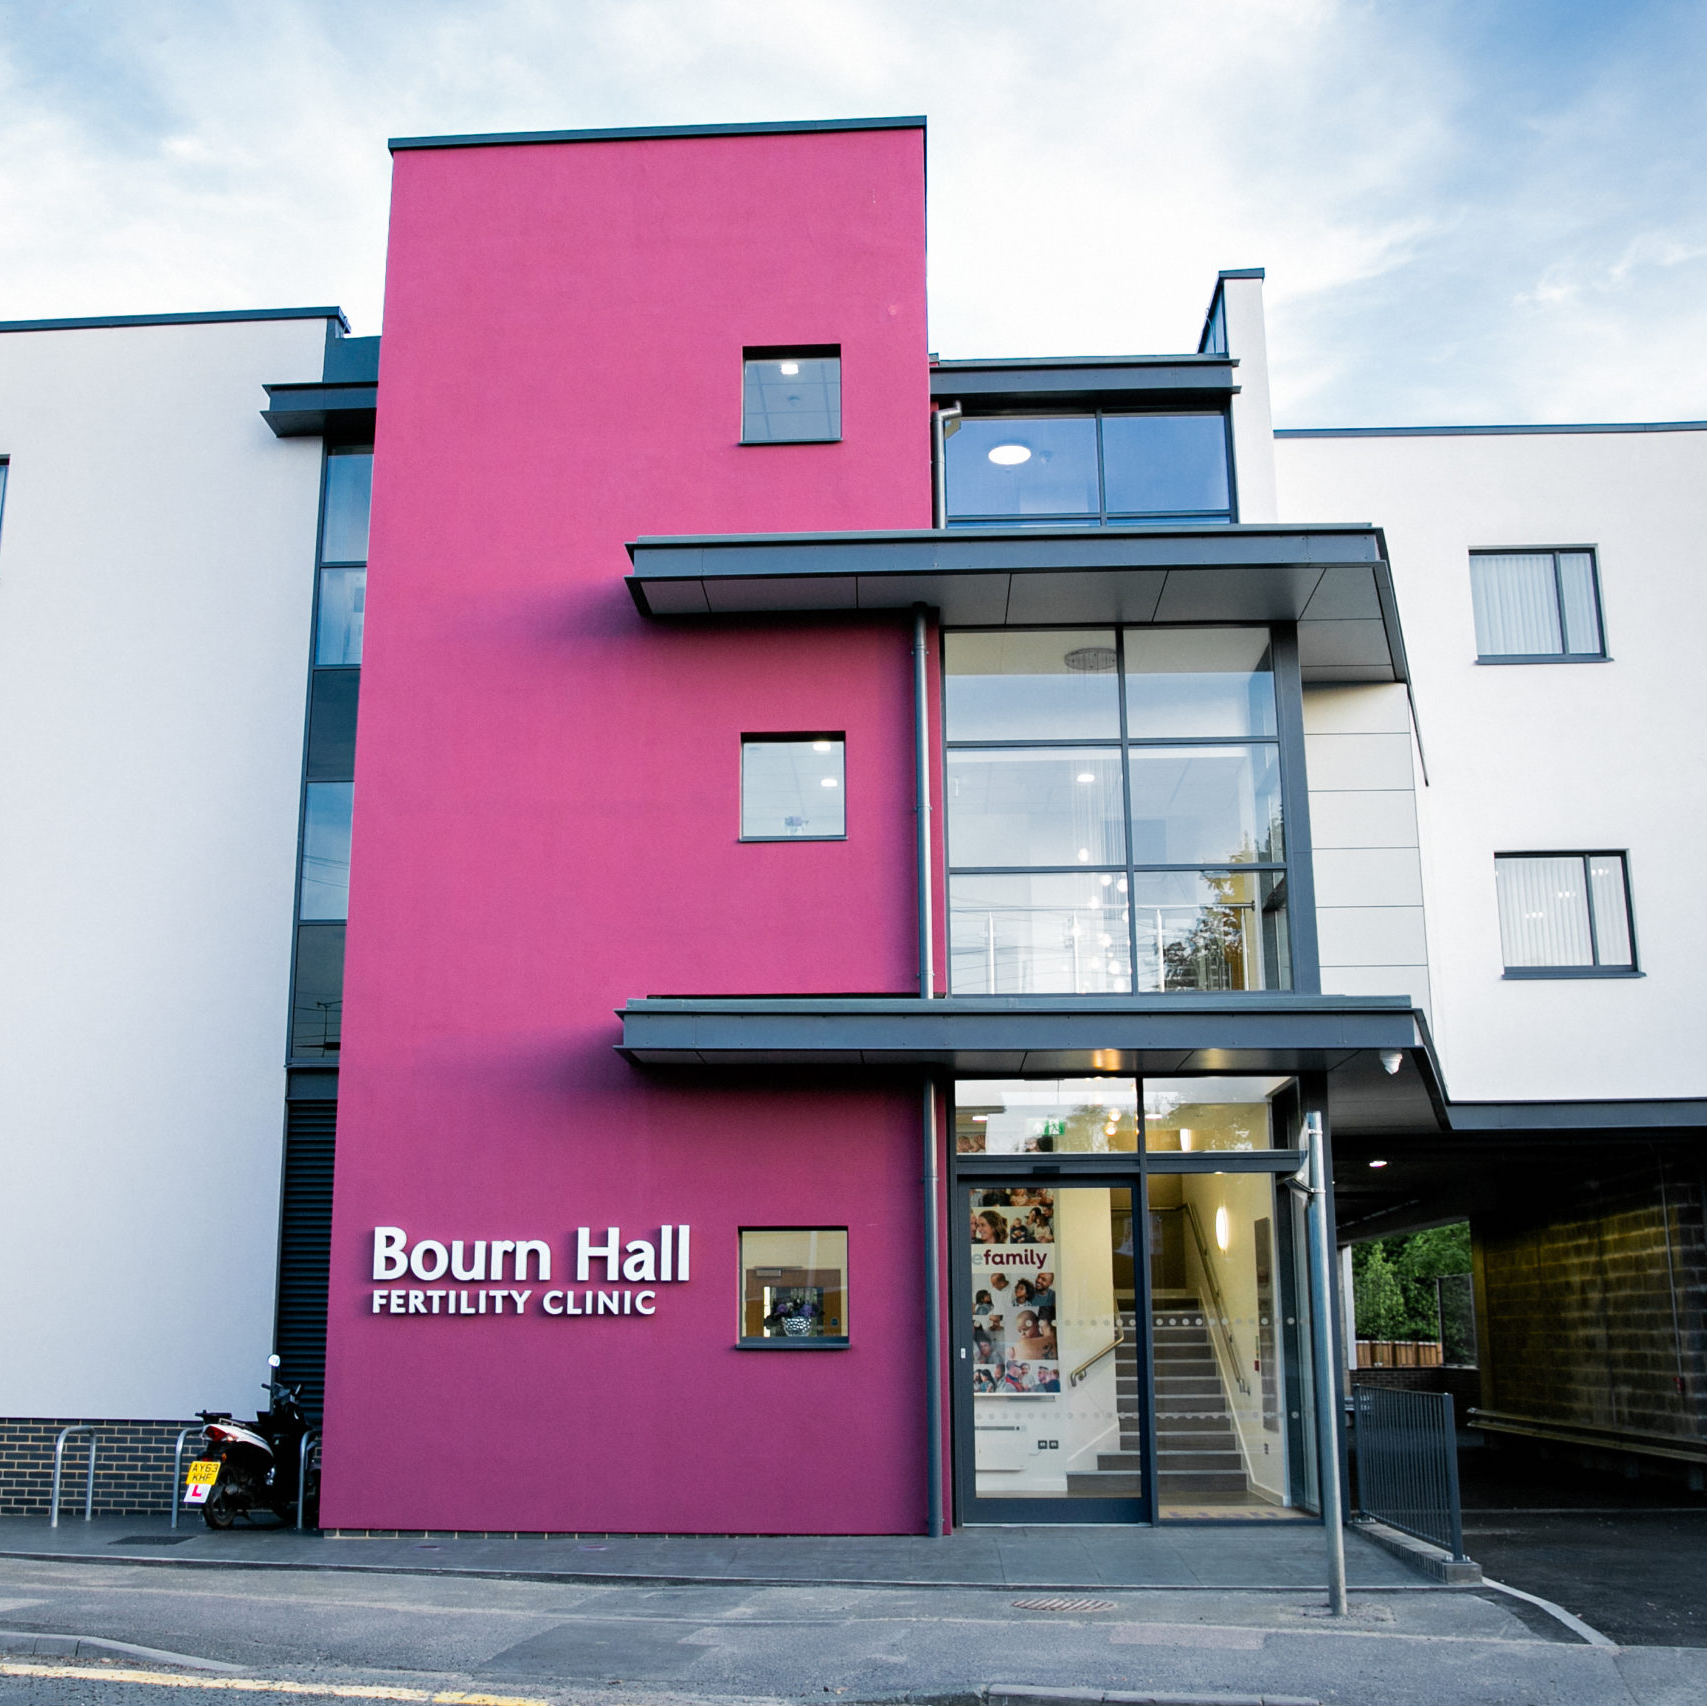 Bourn Hall Fertility Clinic, Wickford